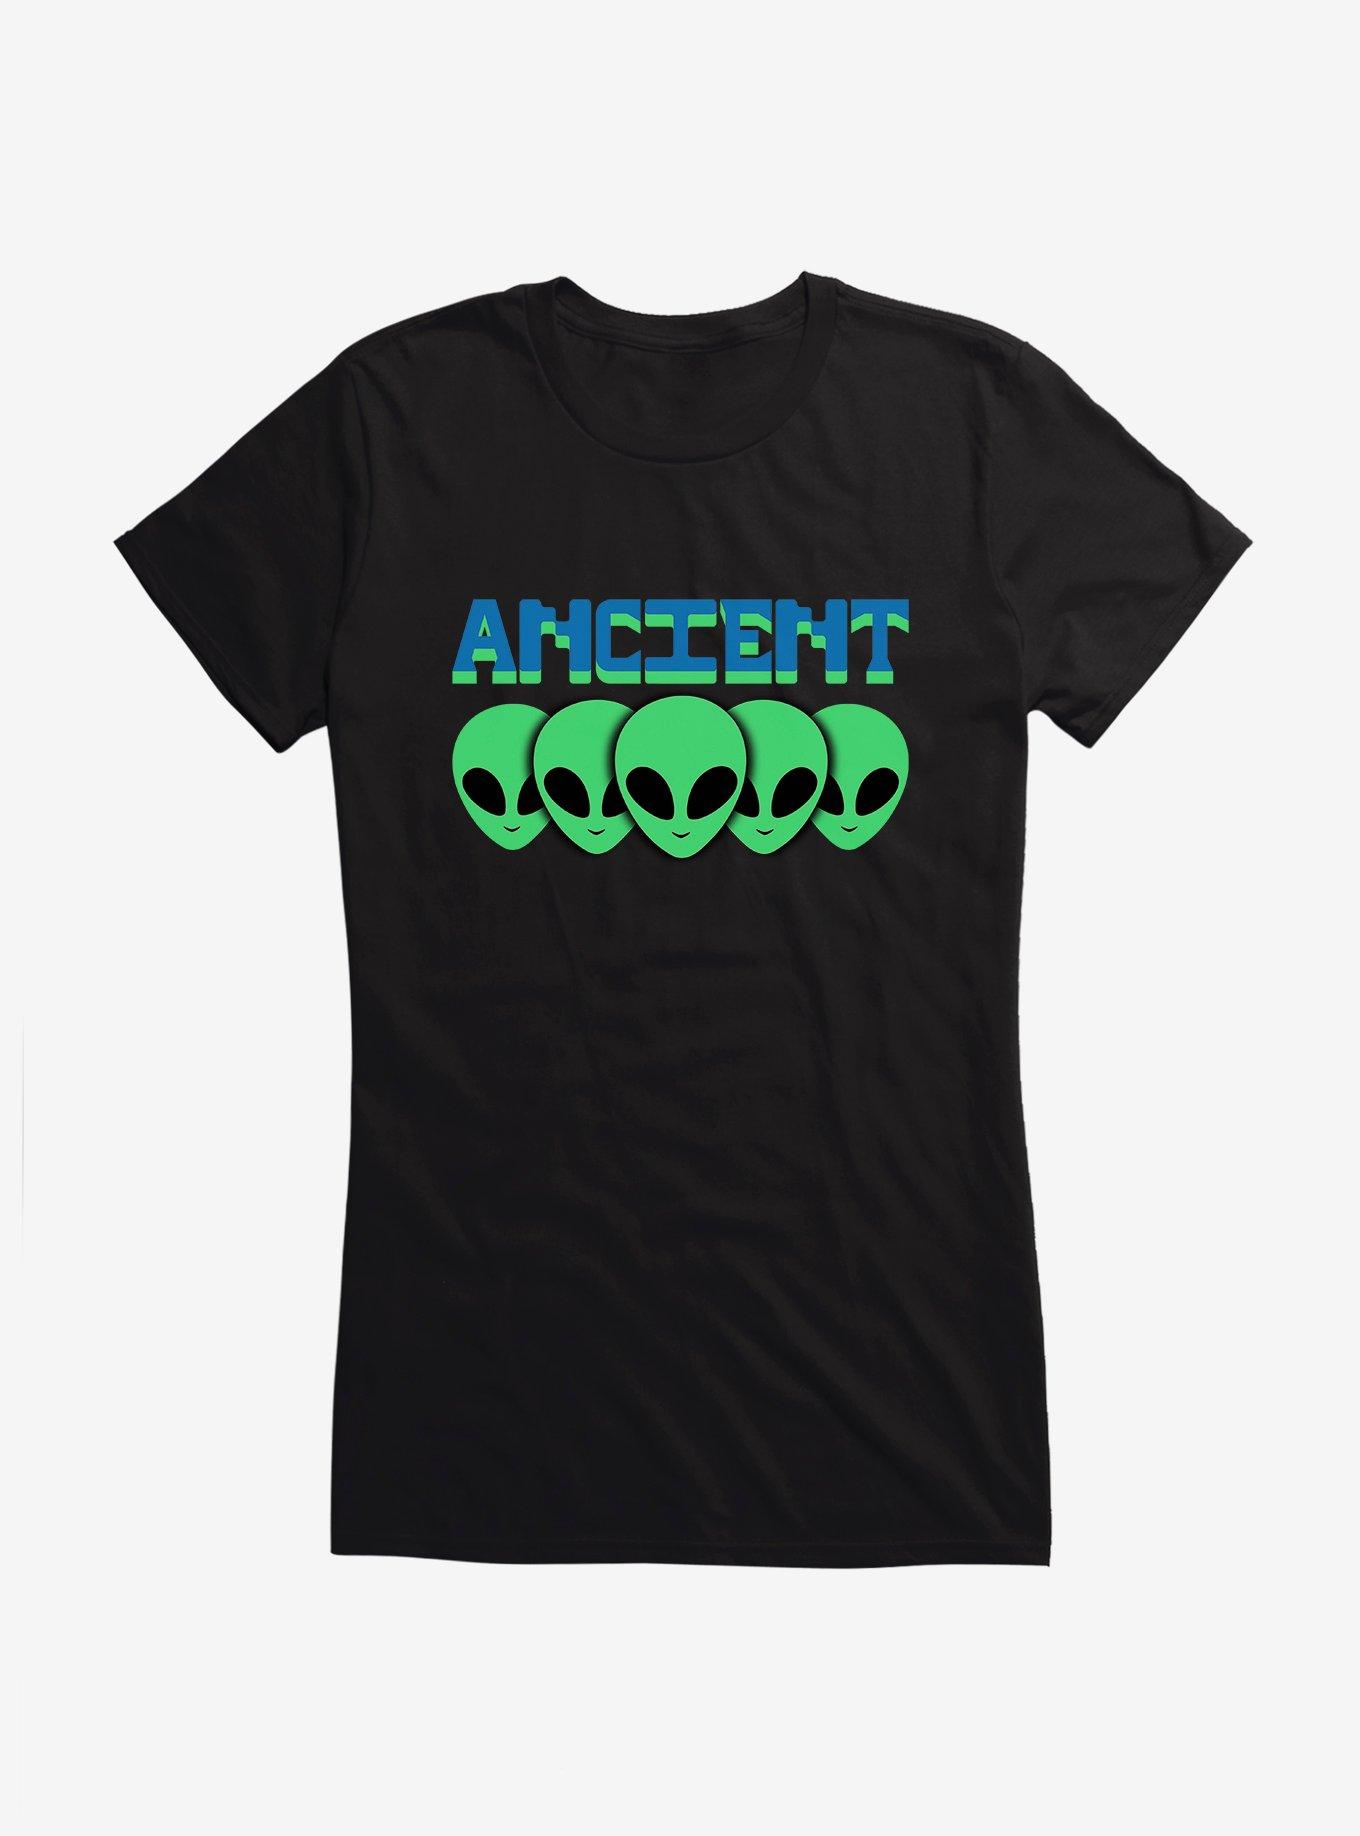 Hot Topic Aliens Ancient Girls T-Shirt